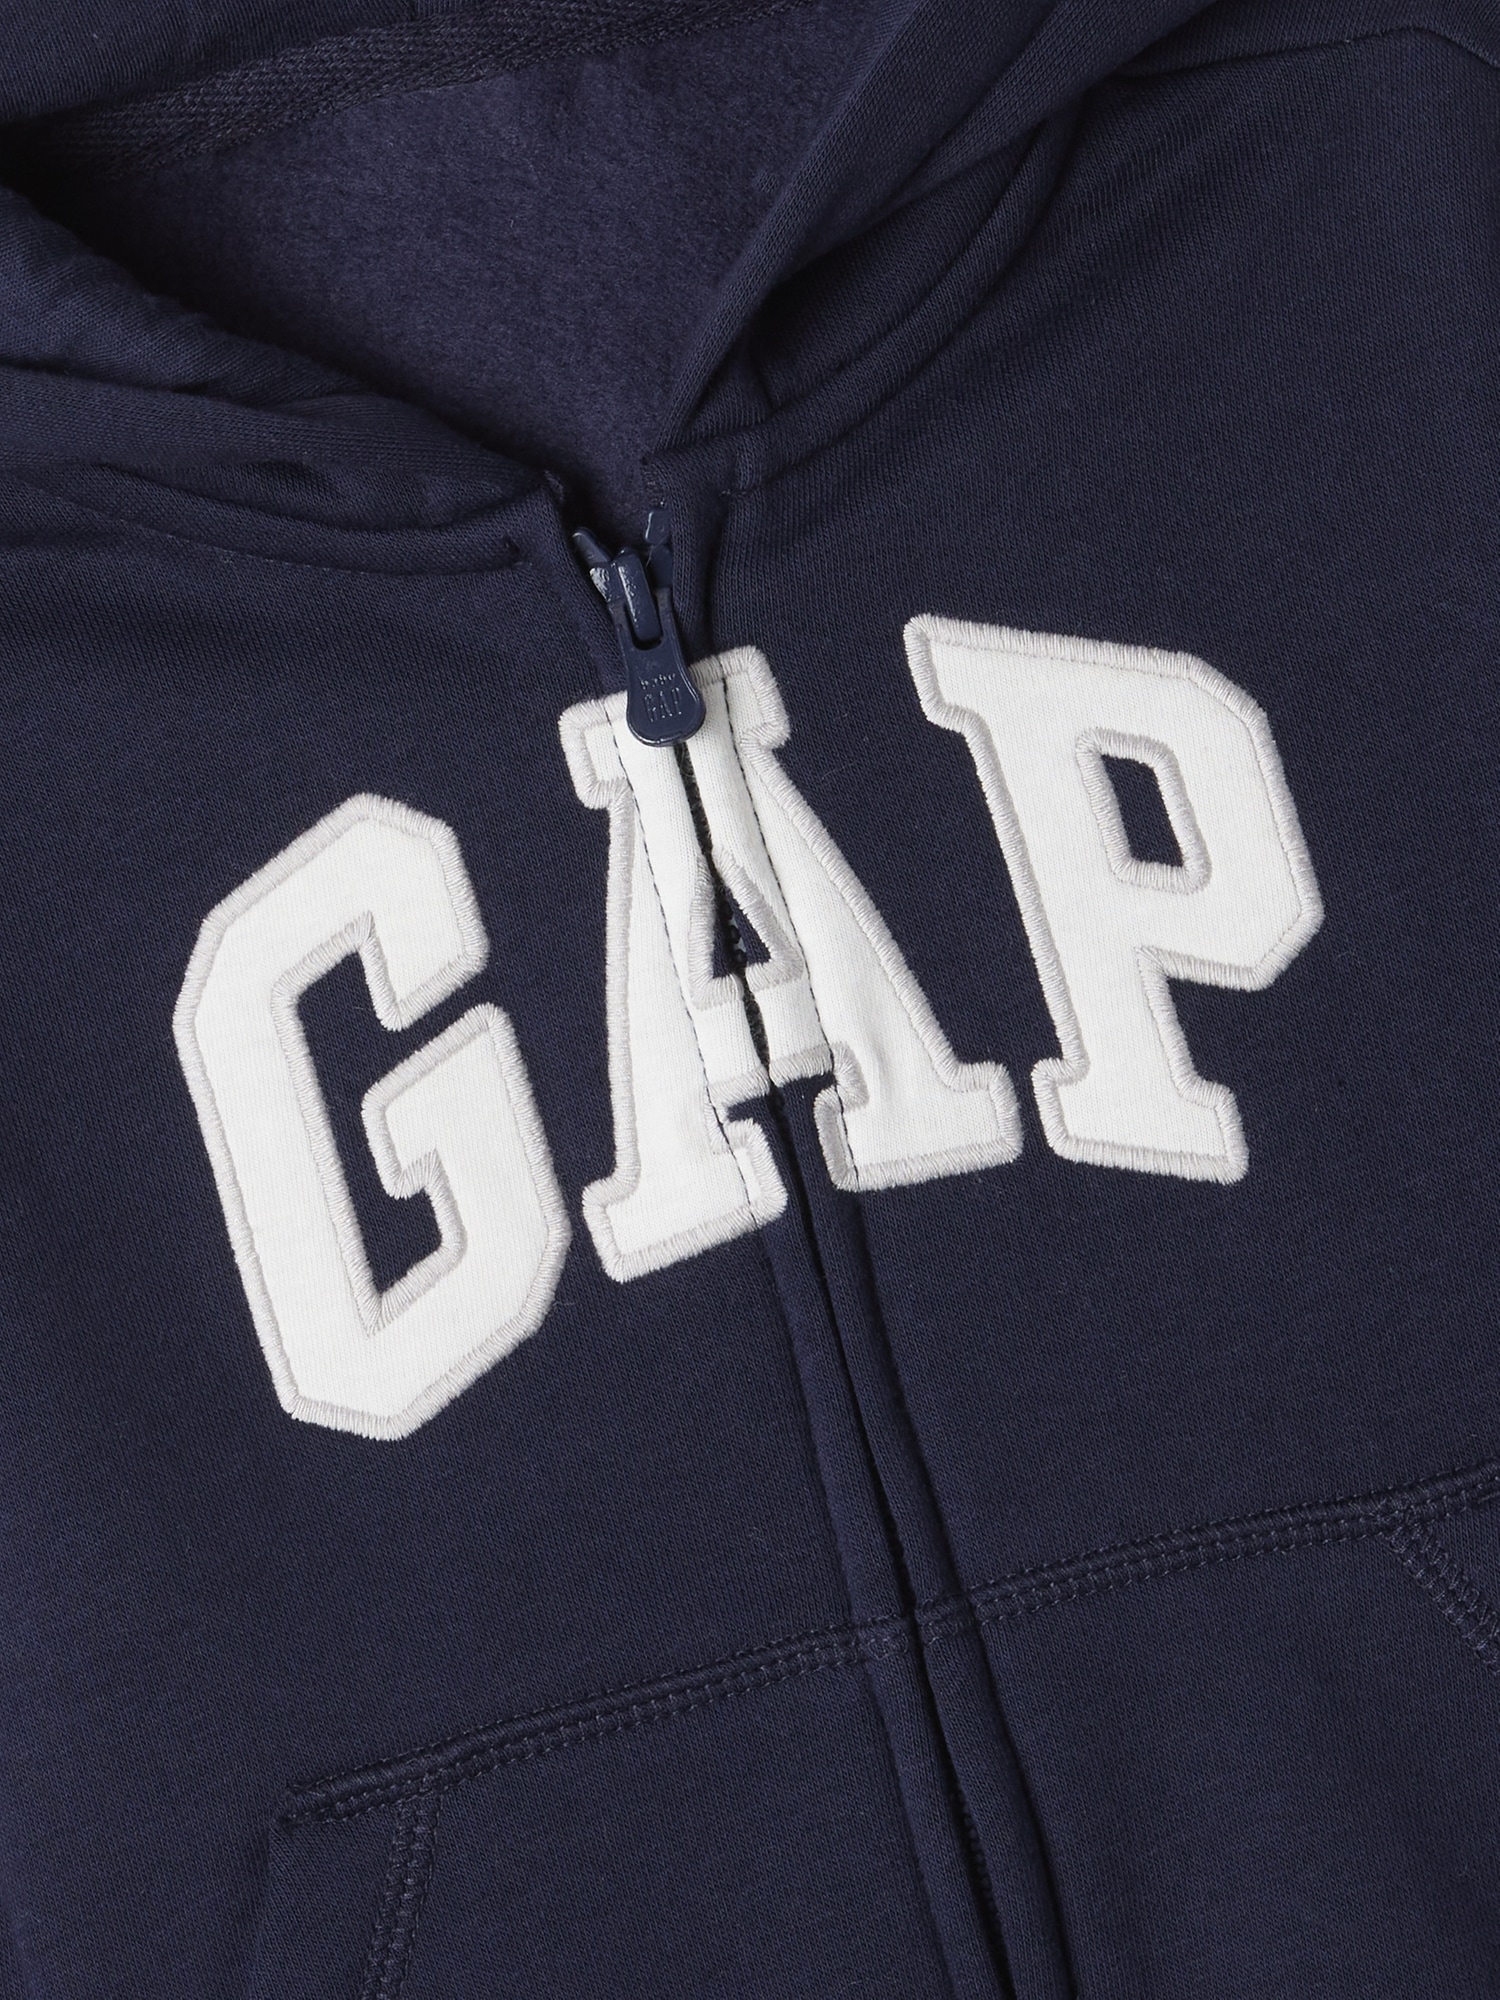 babyGap Logo Zip Hoodie